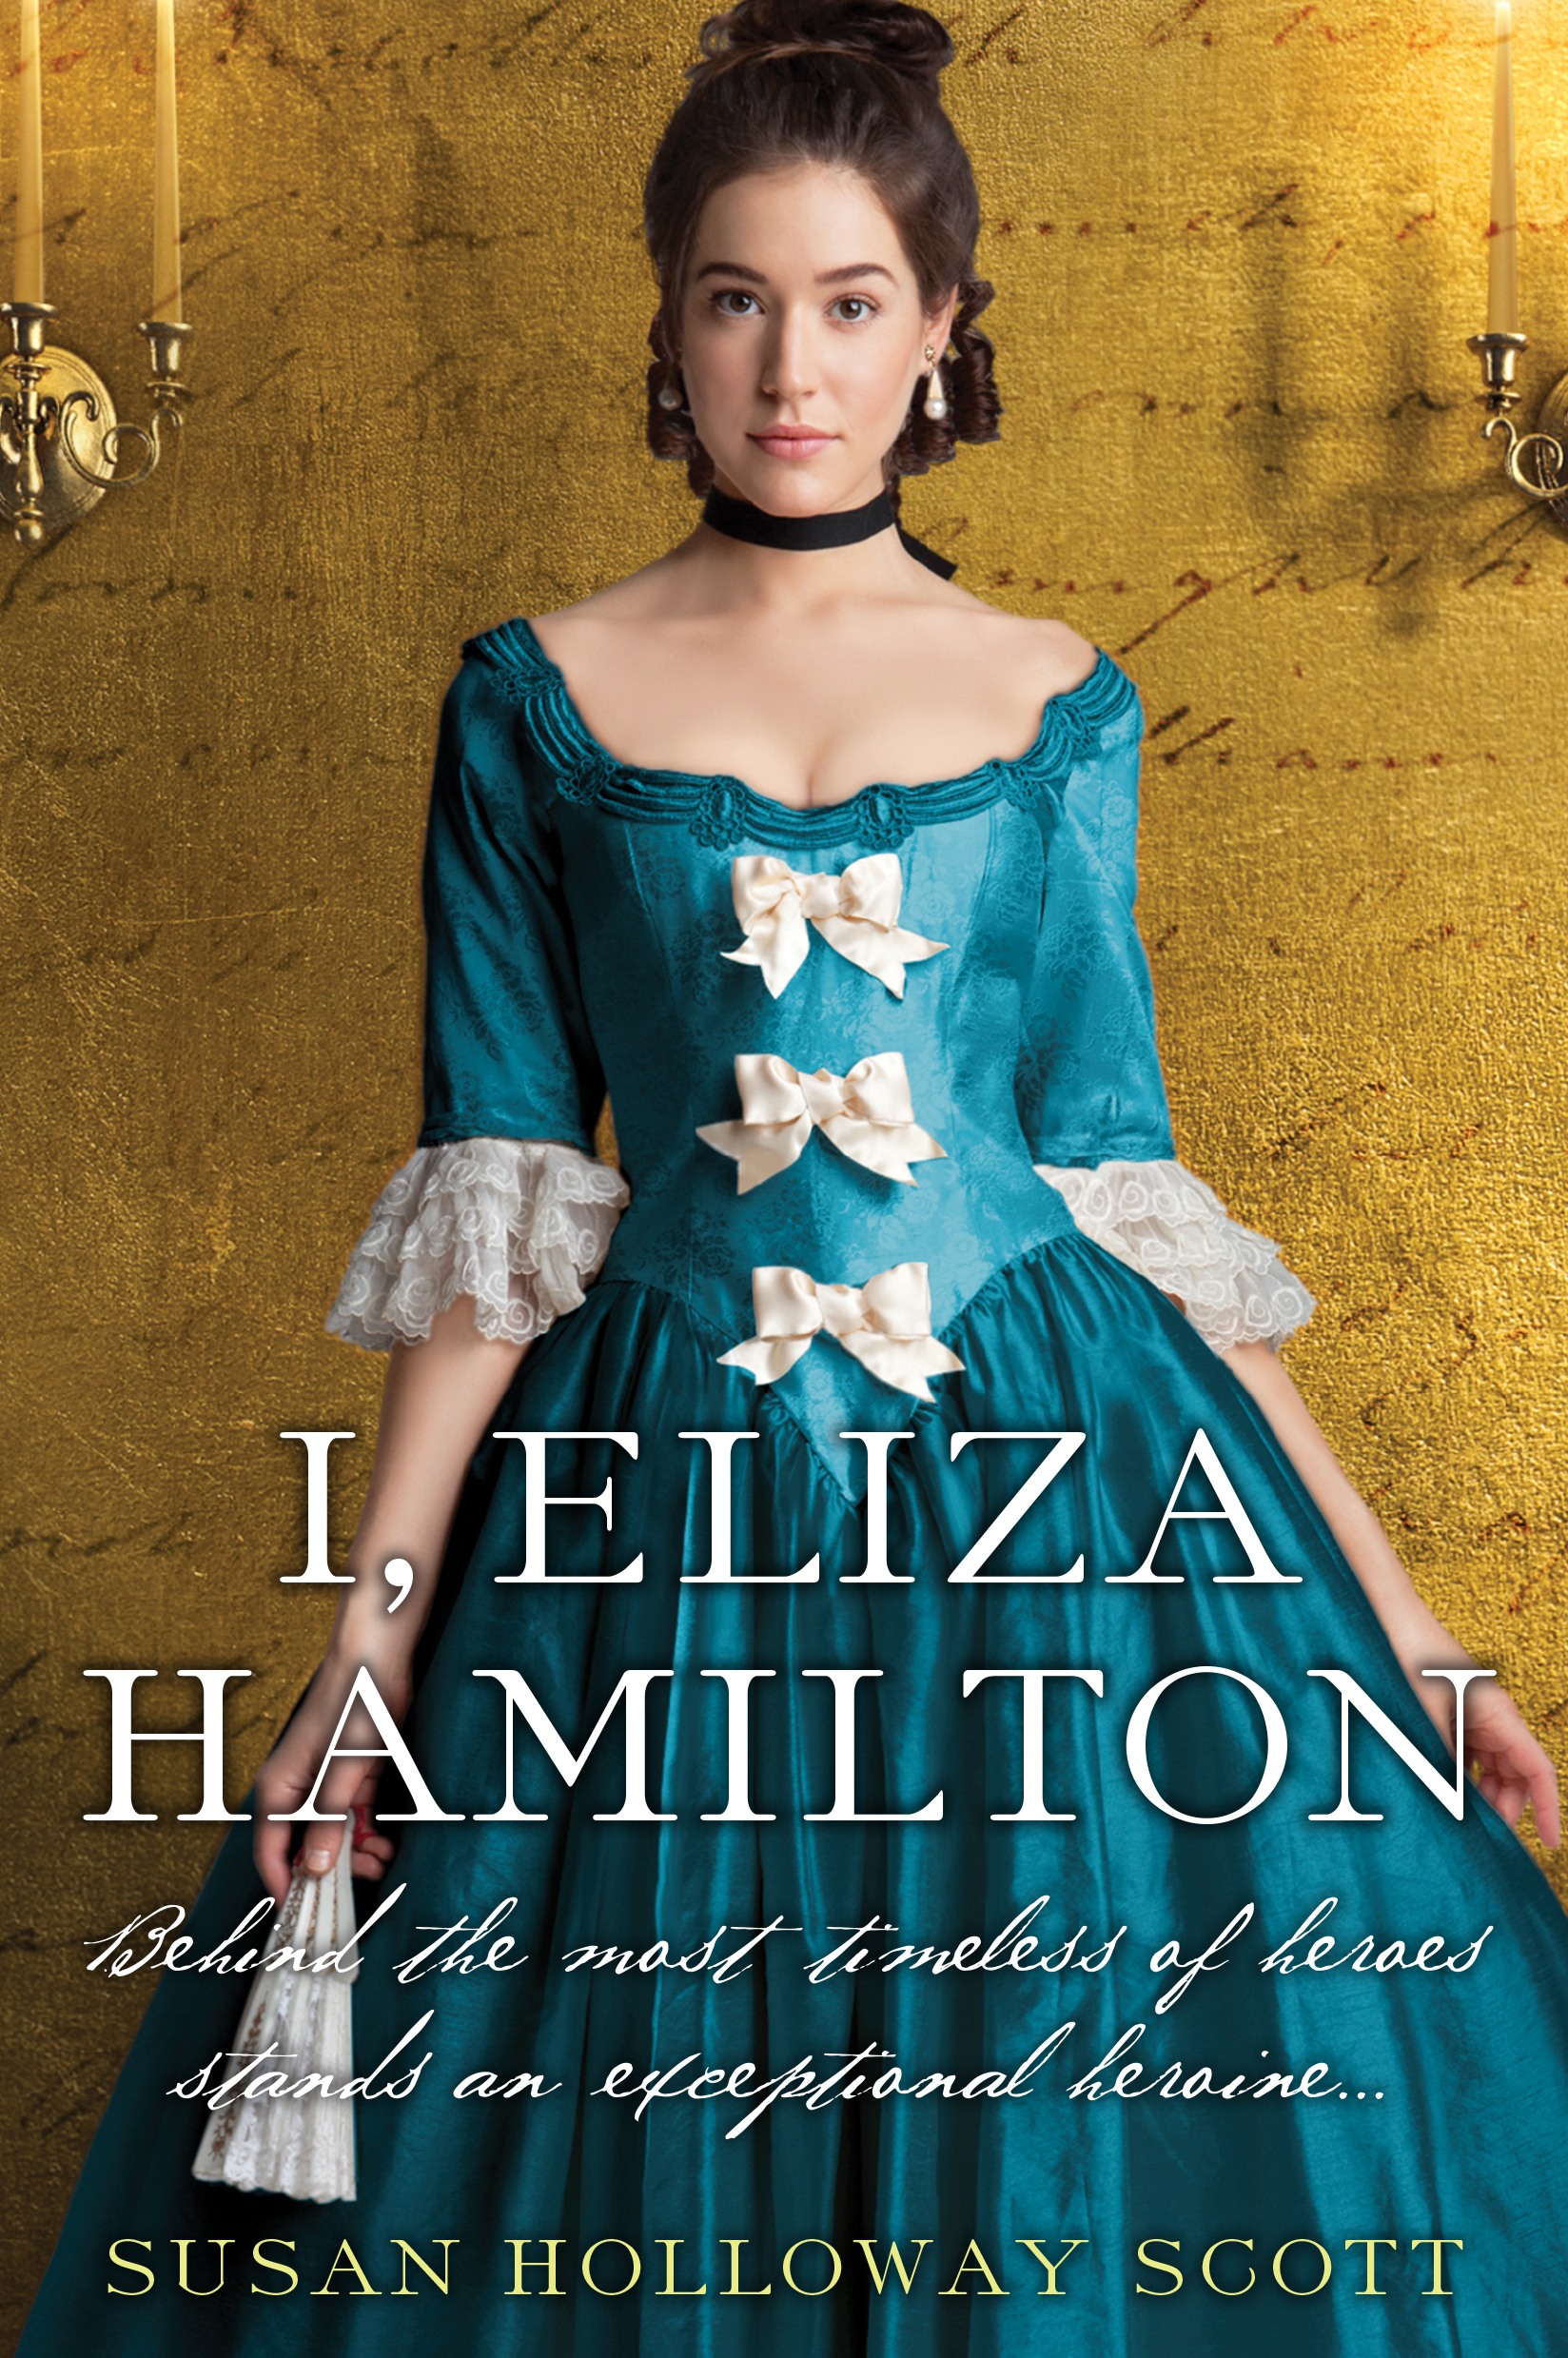 Susan's new novel, I, ELIZA HAMILTON is coming in September, 2017